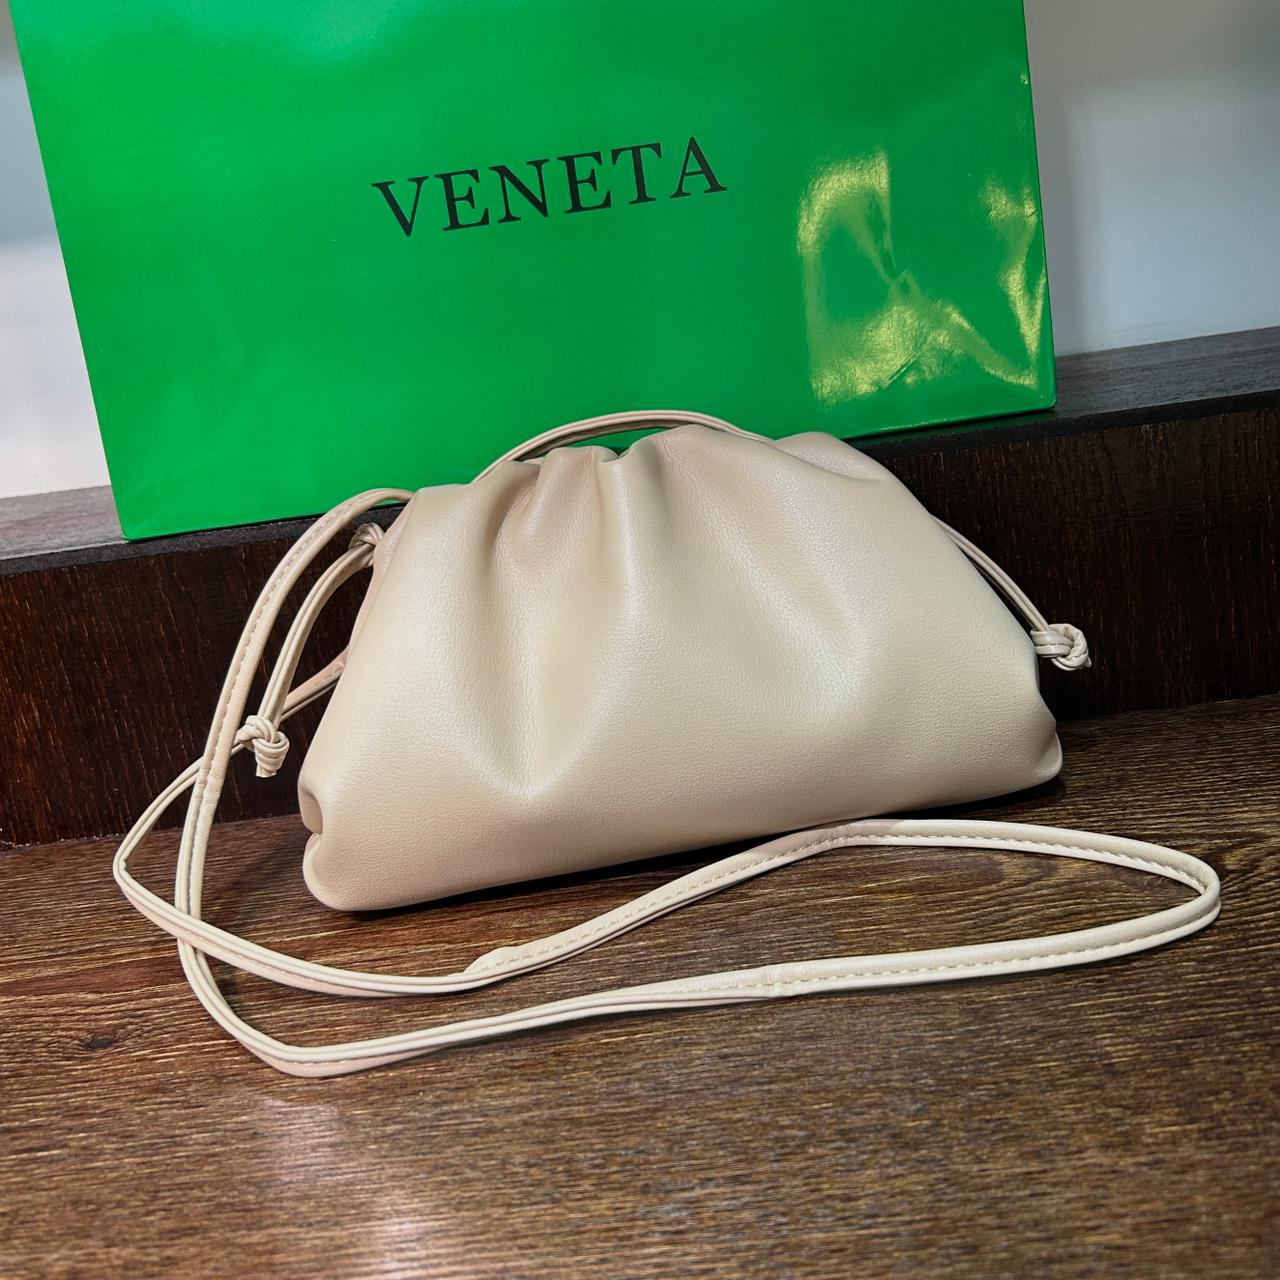 Bottega Veneta Jodie Mini metallic leather tote Bag